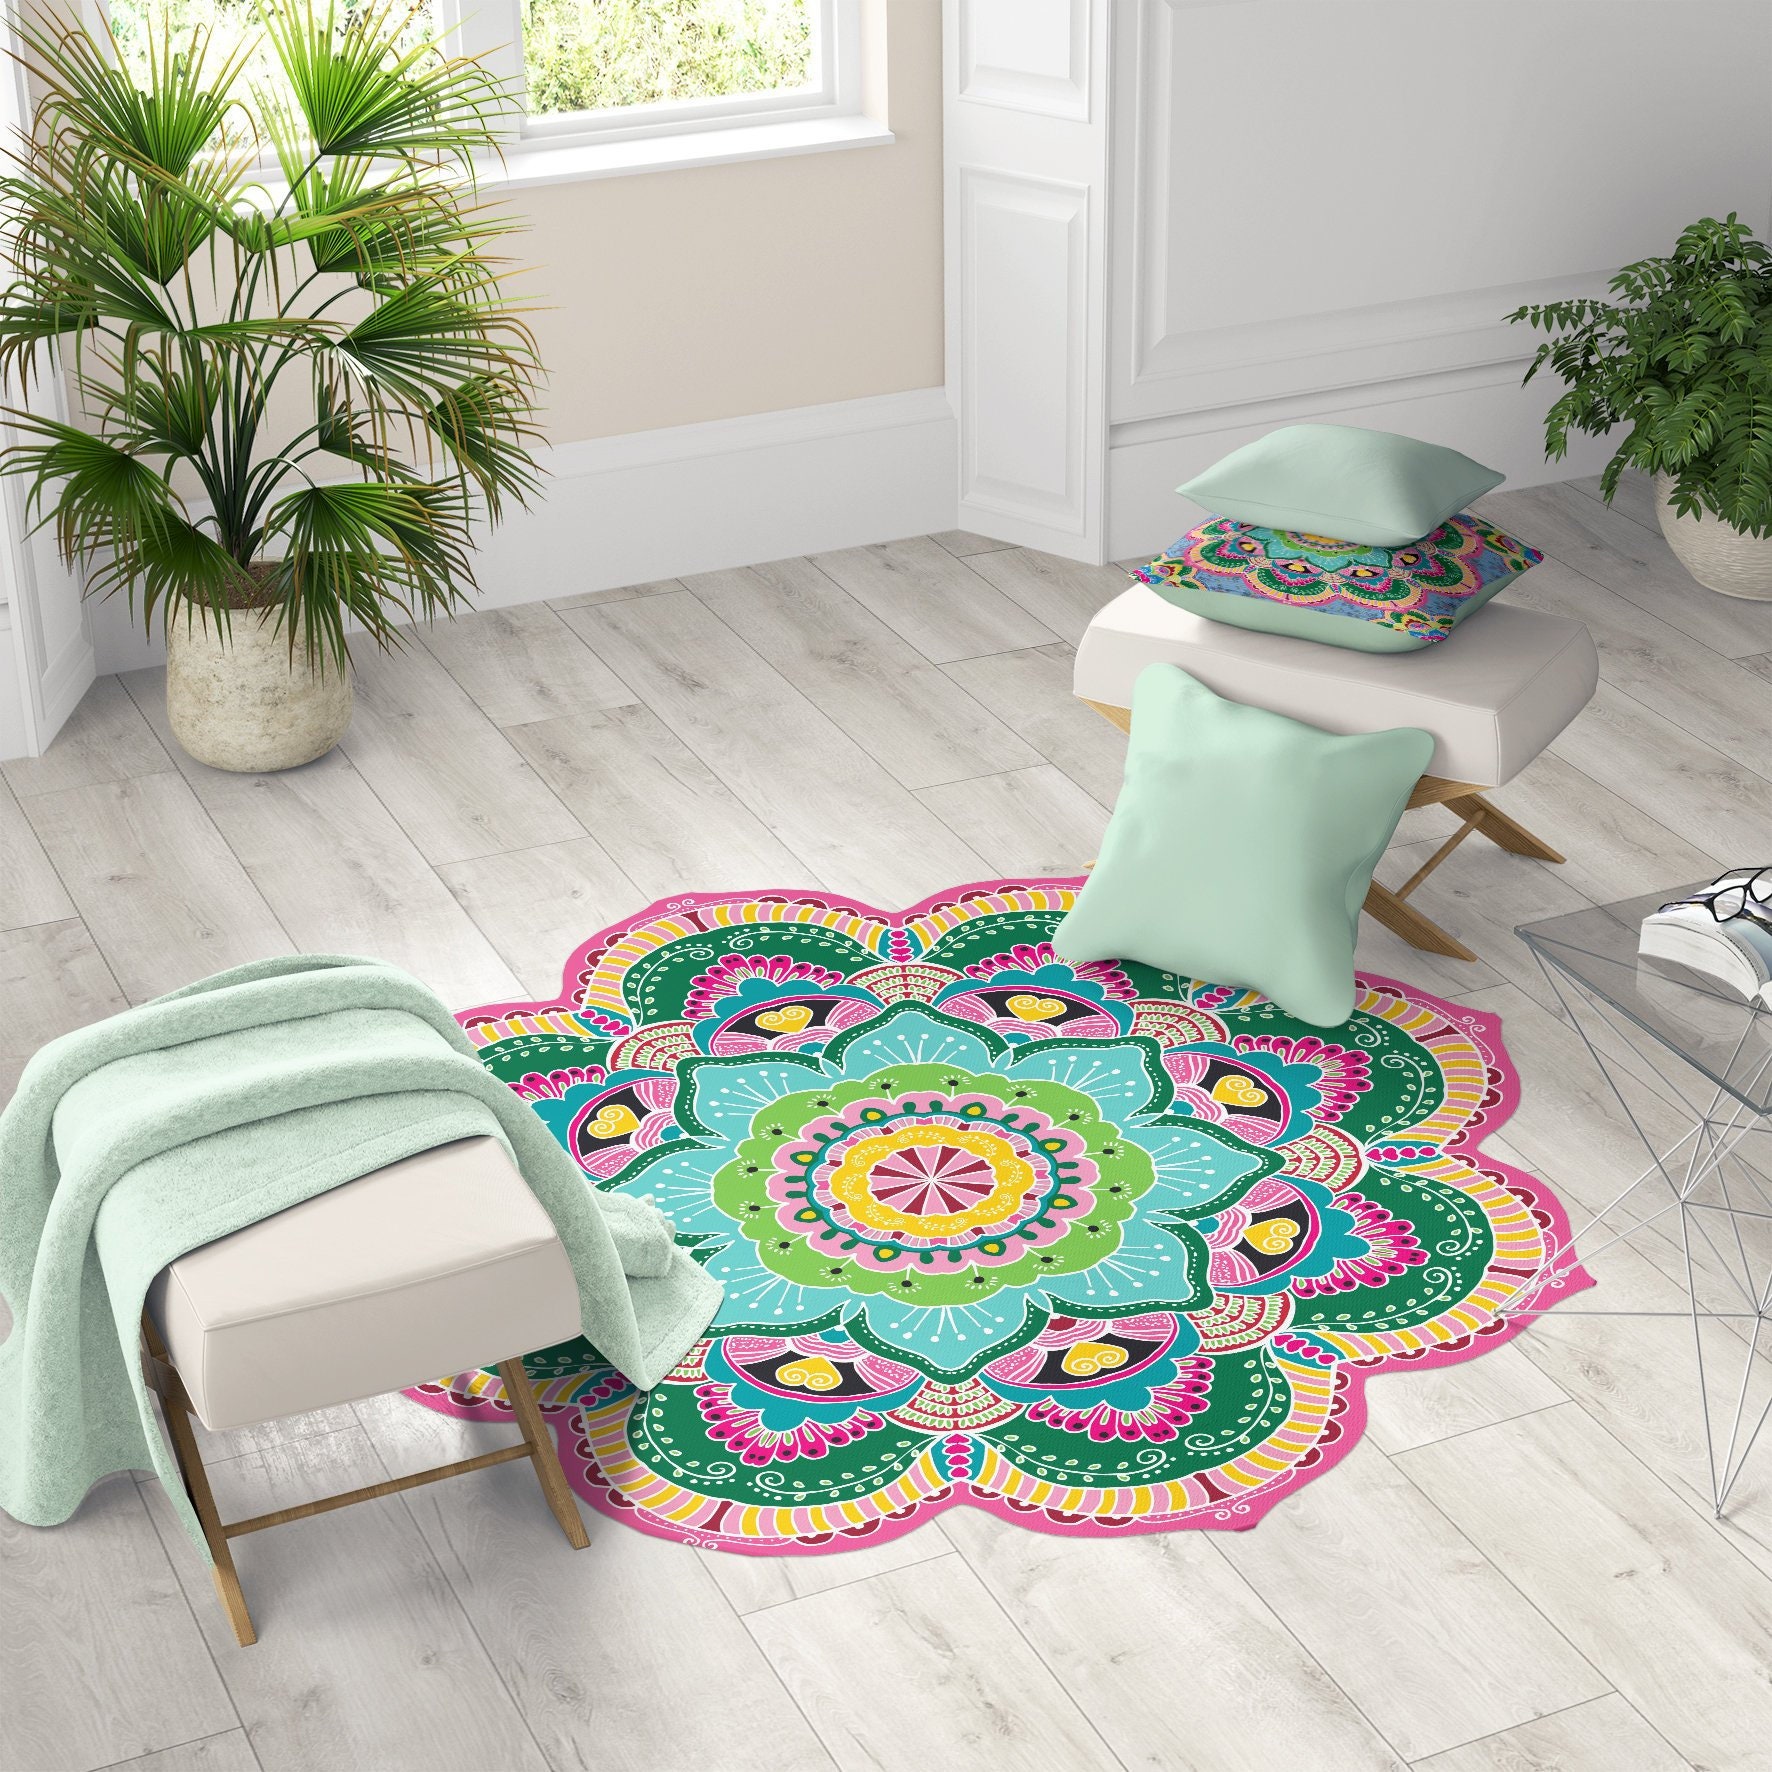 Hippie Mandala Yoga Mat Home Bedroom Round Bath Carpet Non-Slip Picnic Beach Rug 